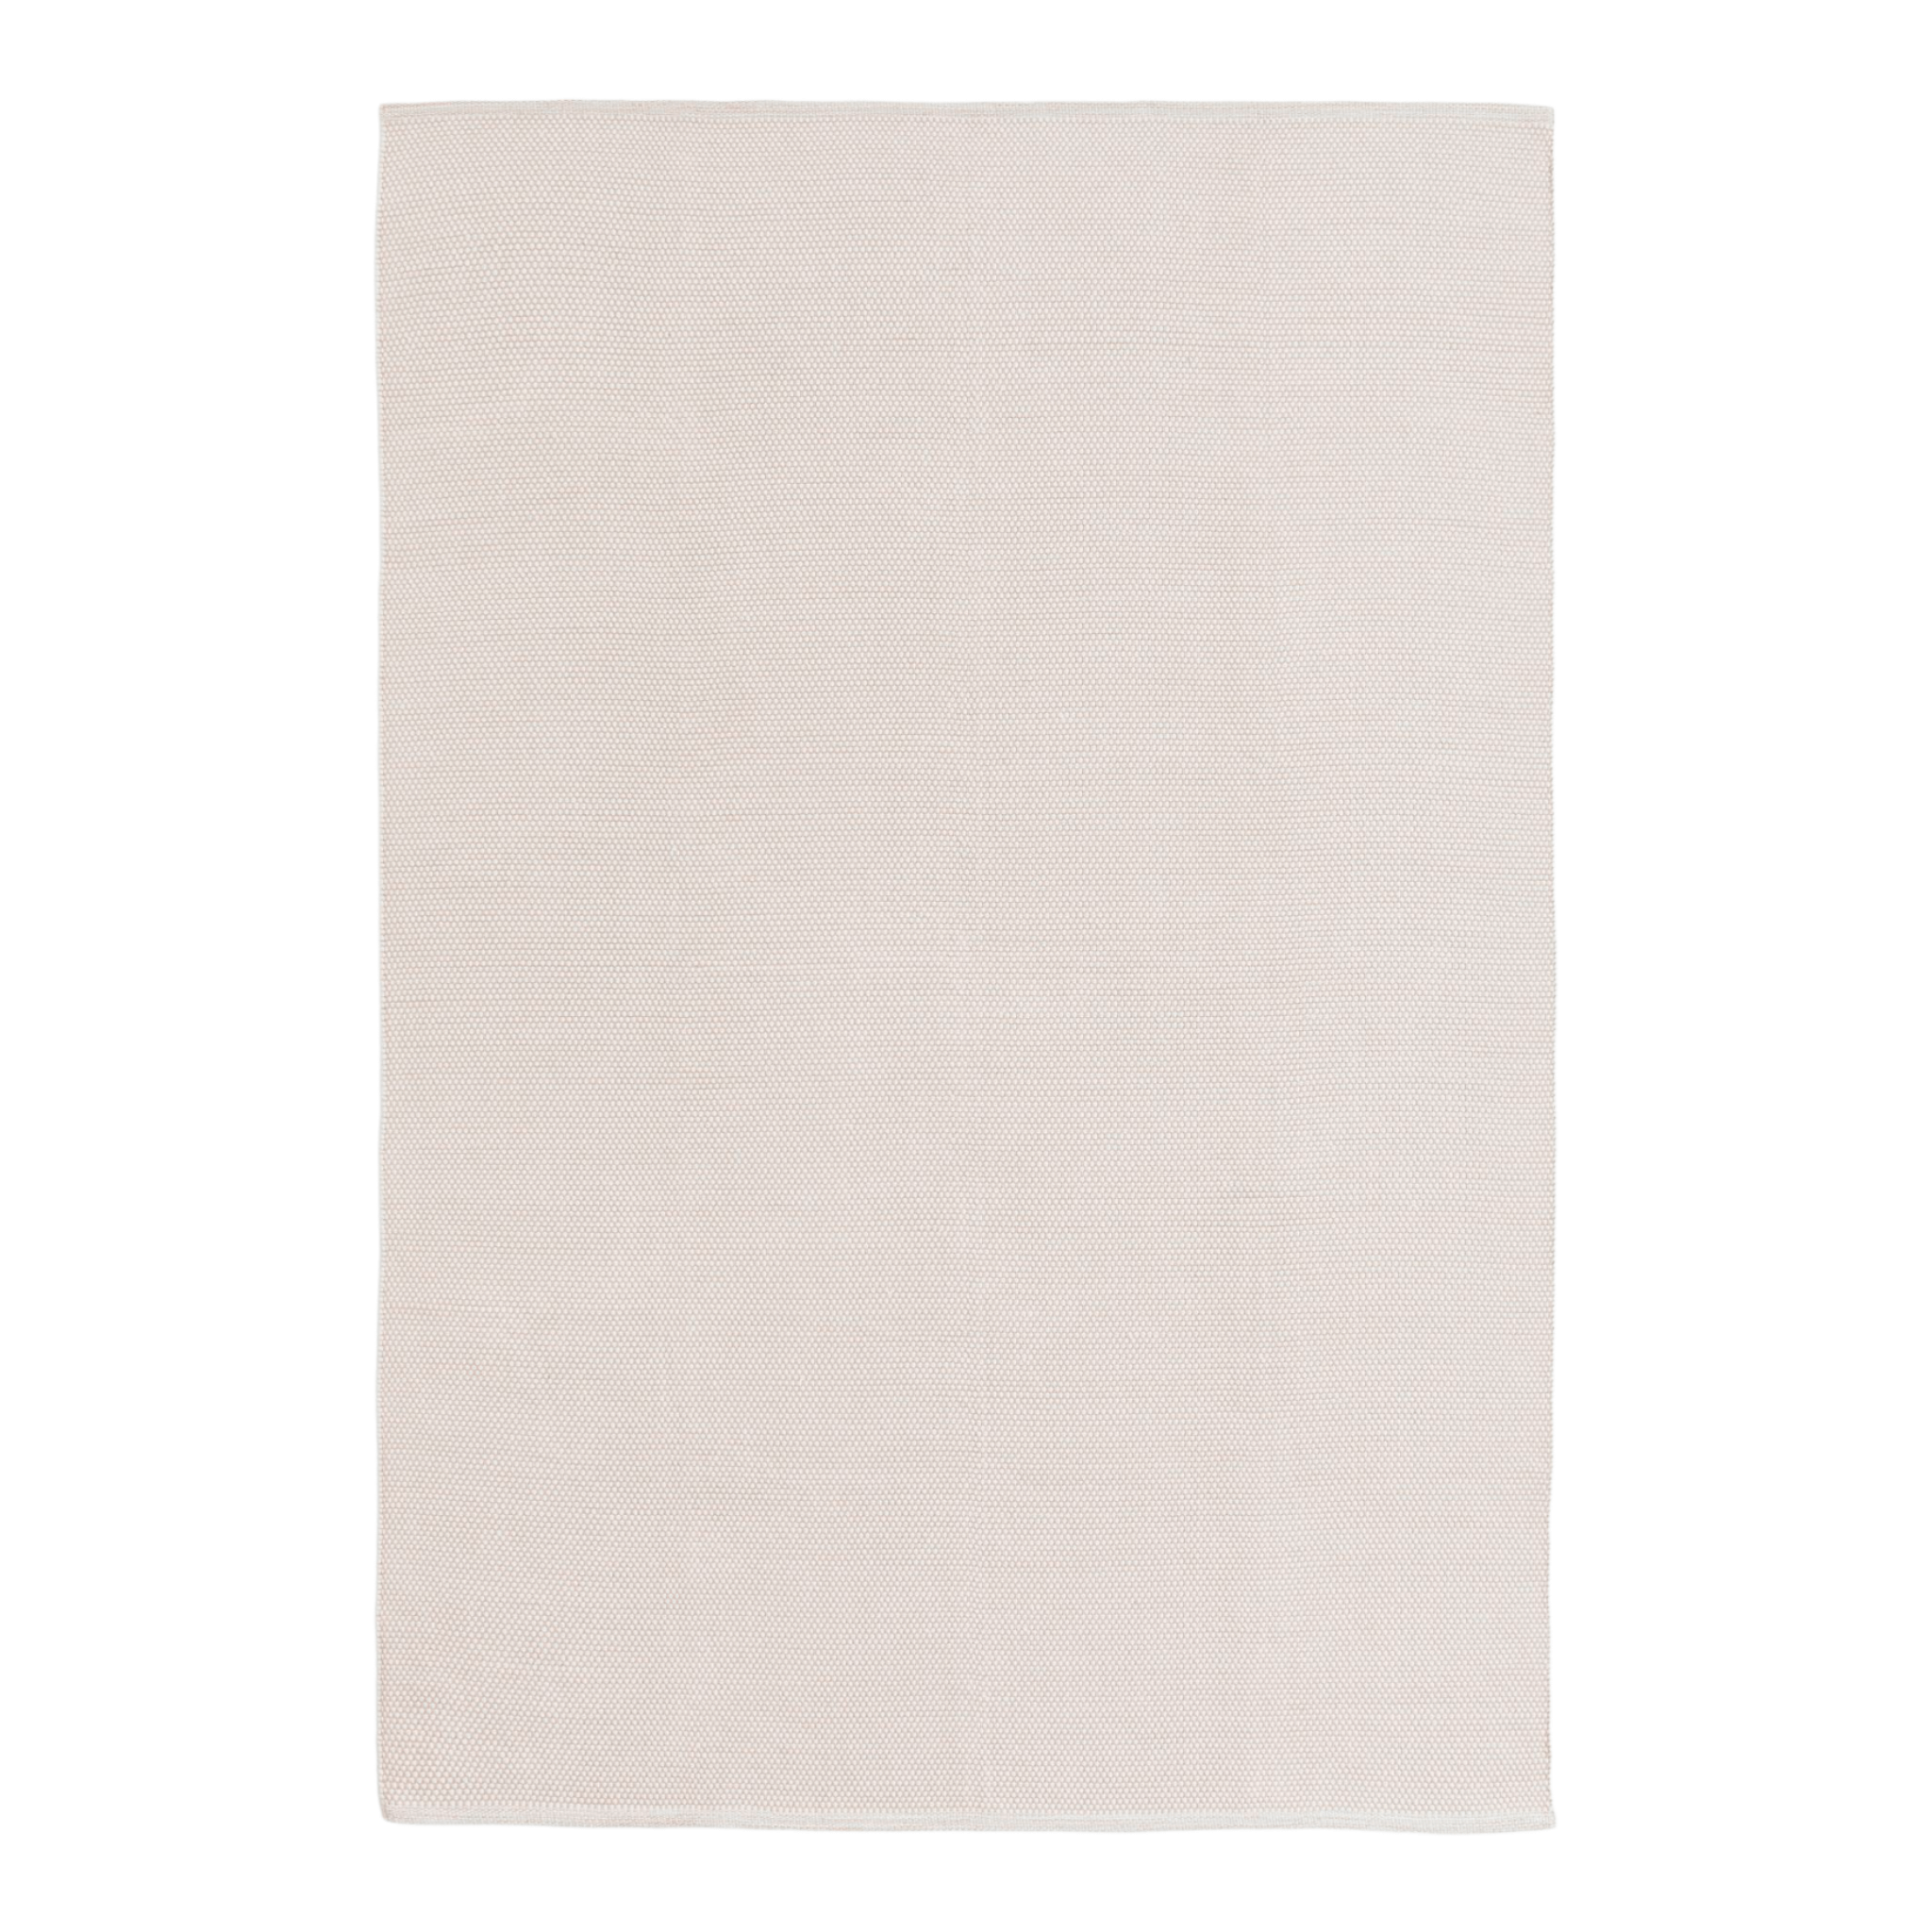 Ковер H&M Home Textured Cotton, бежевый ковер h